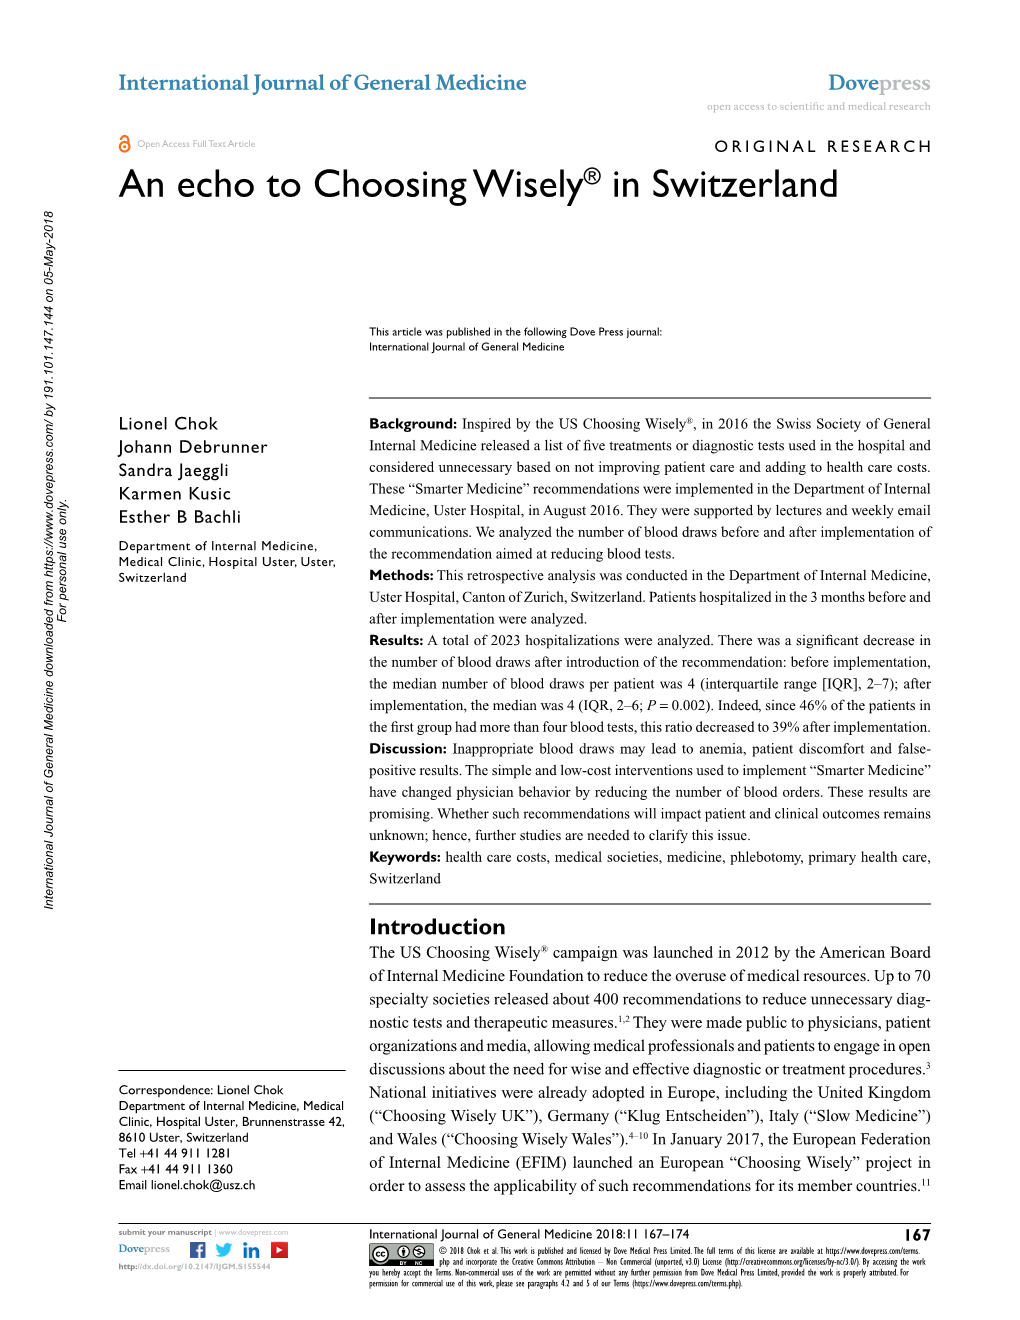 An Echo to Choosing Wisely® in Switzerland